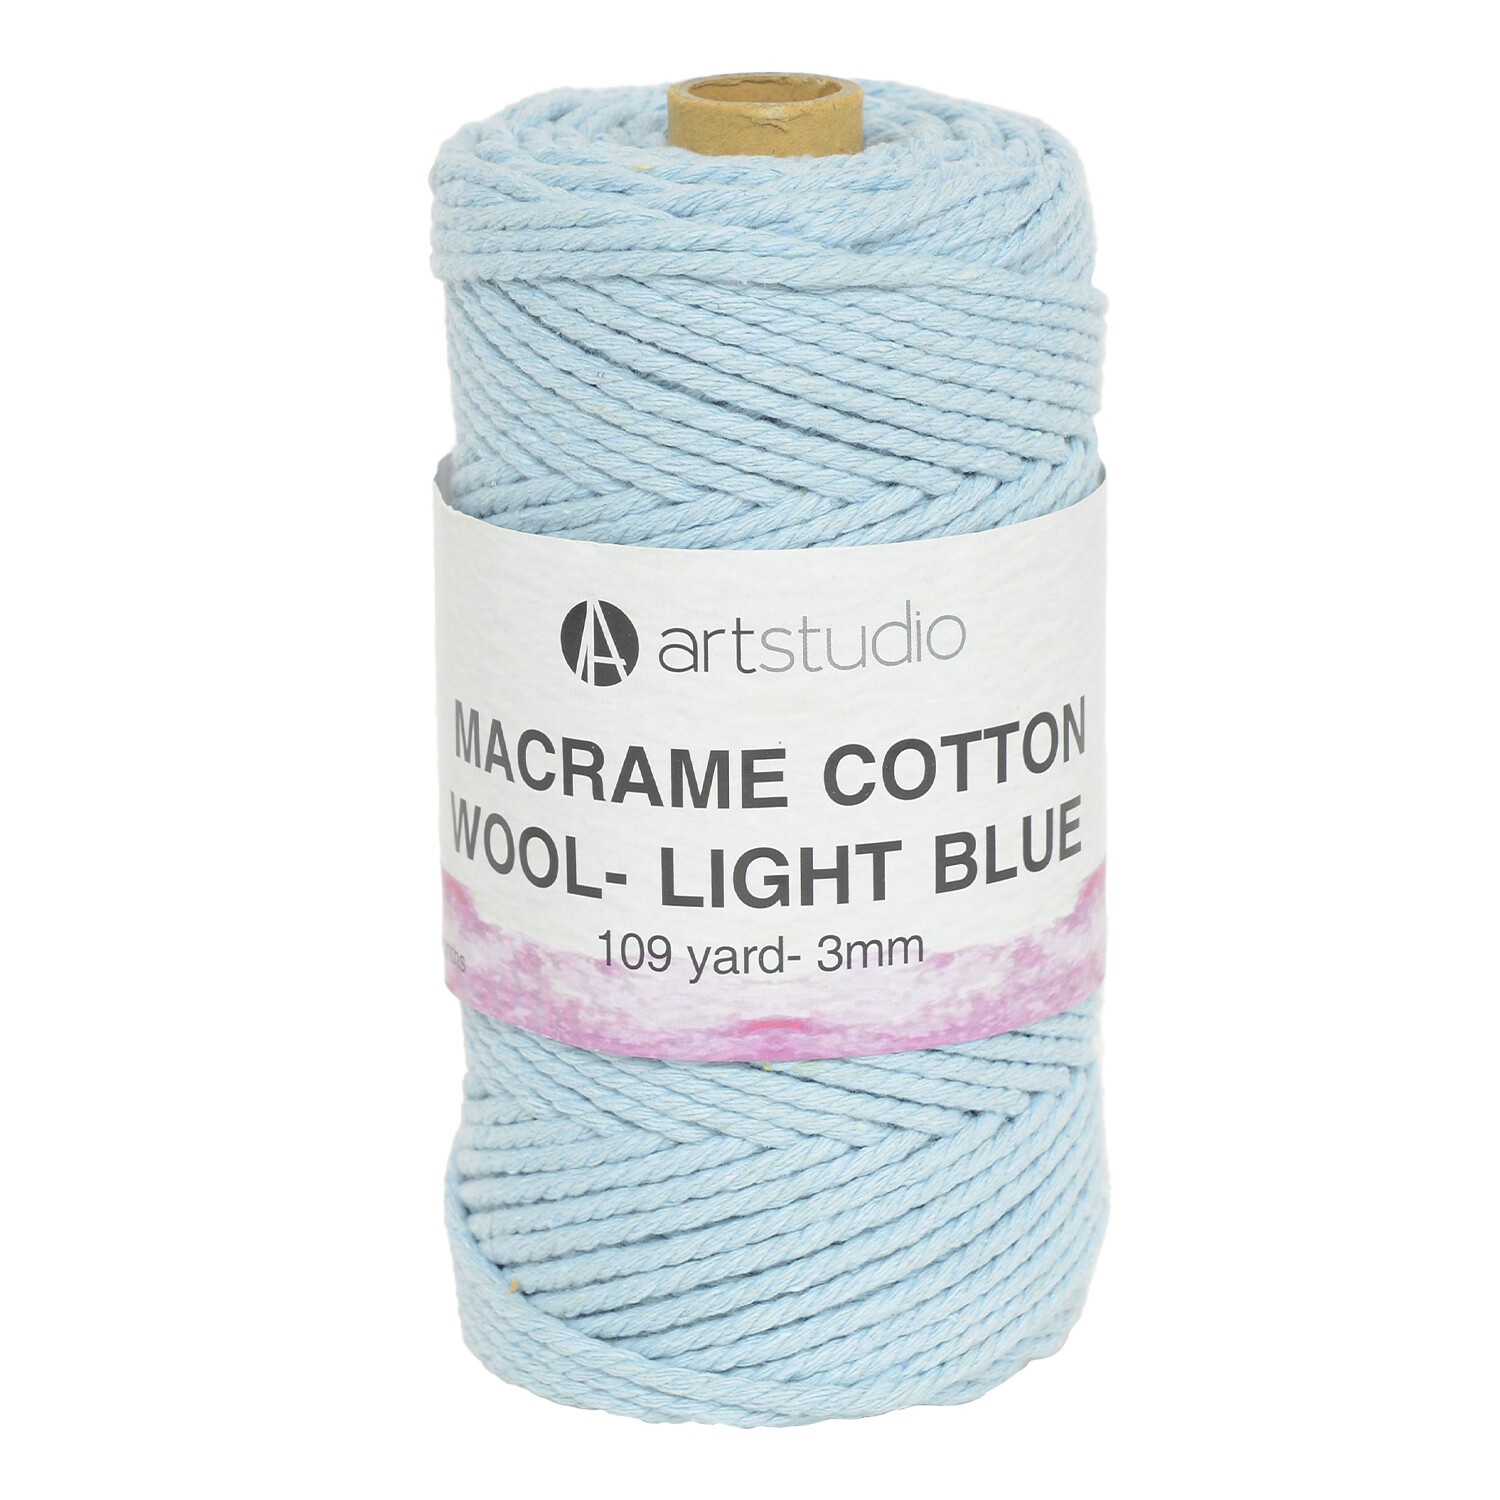 Art Studio Macrame Cotton Wool - Light Blue Image 1